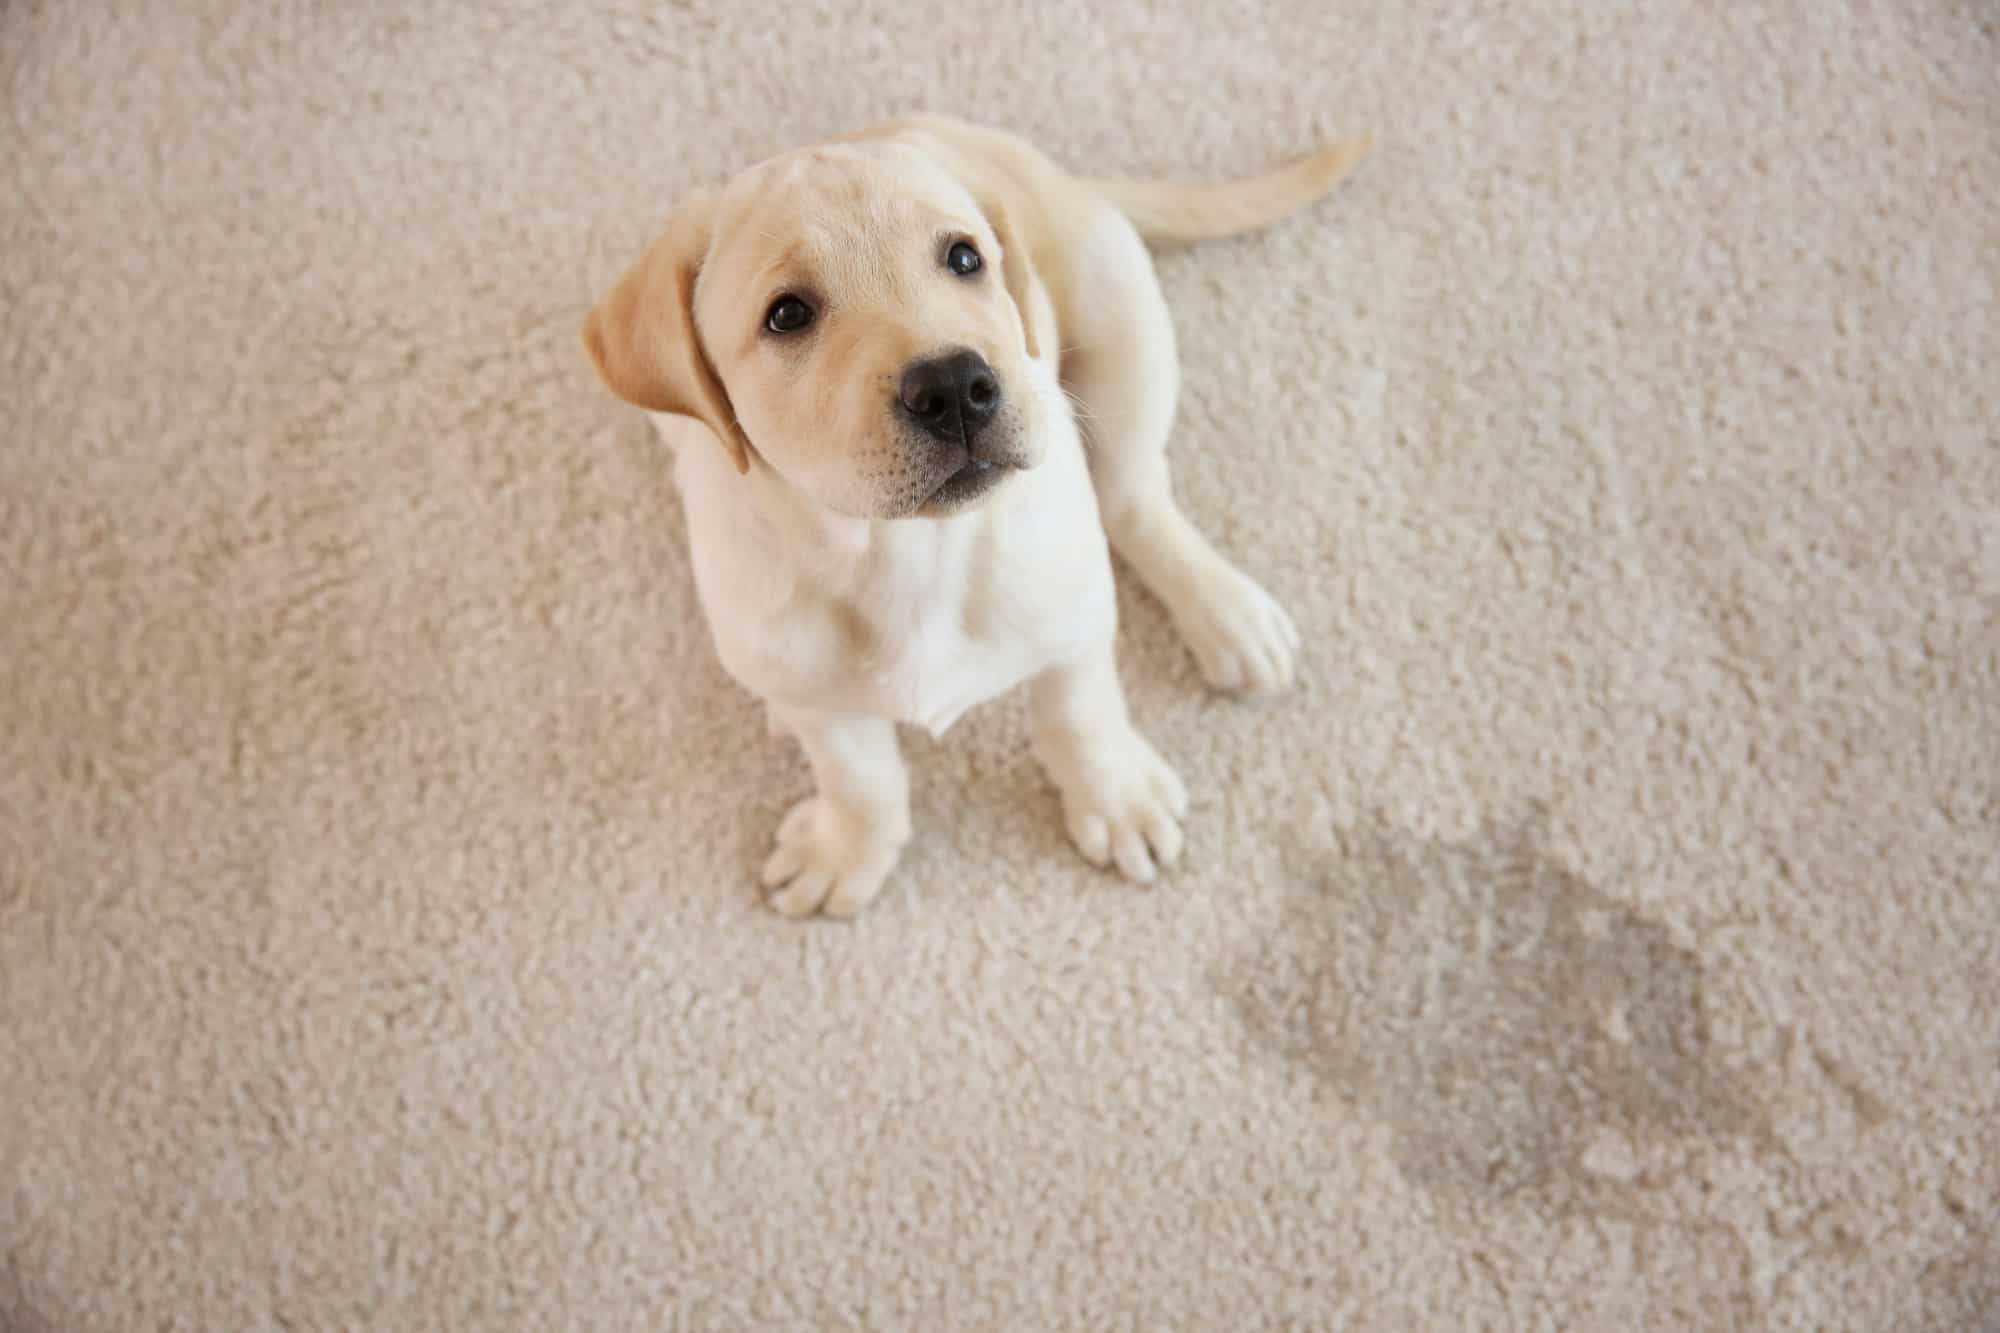 Puppy sitting on carpet near wet spot.